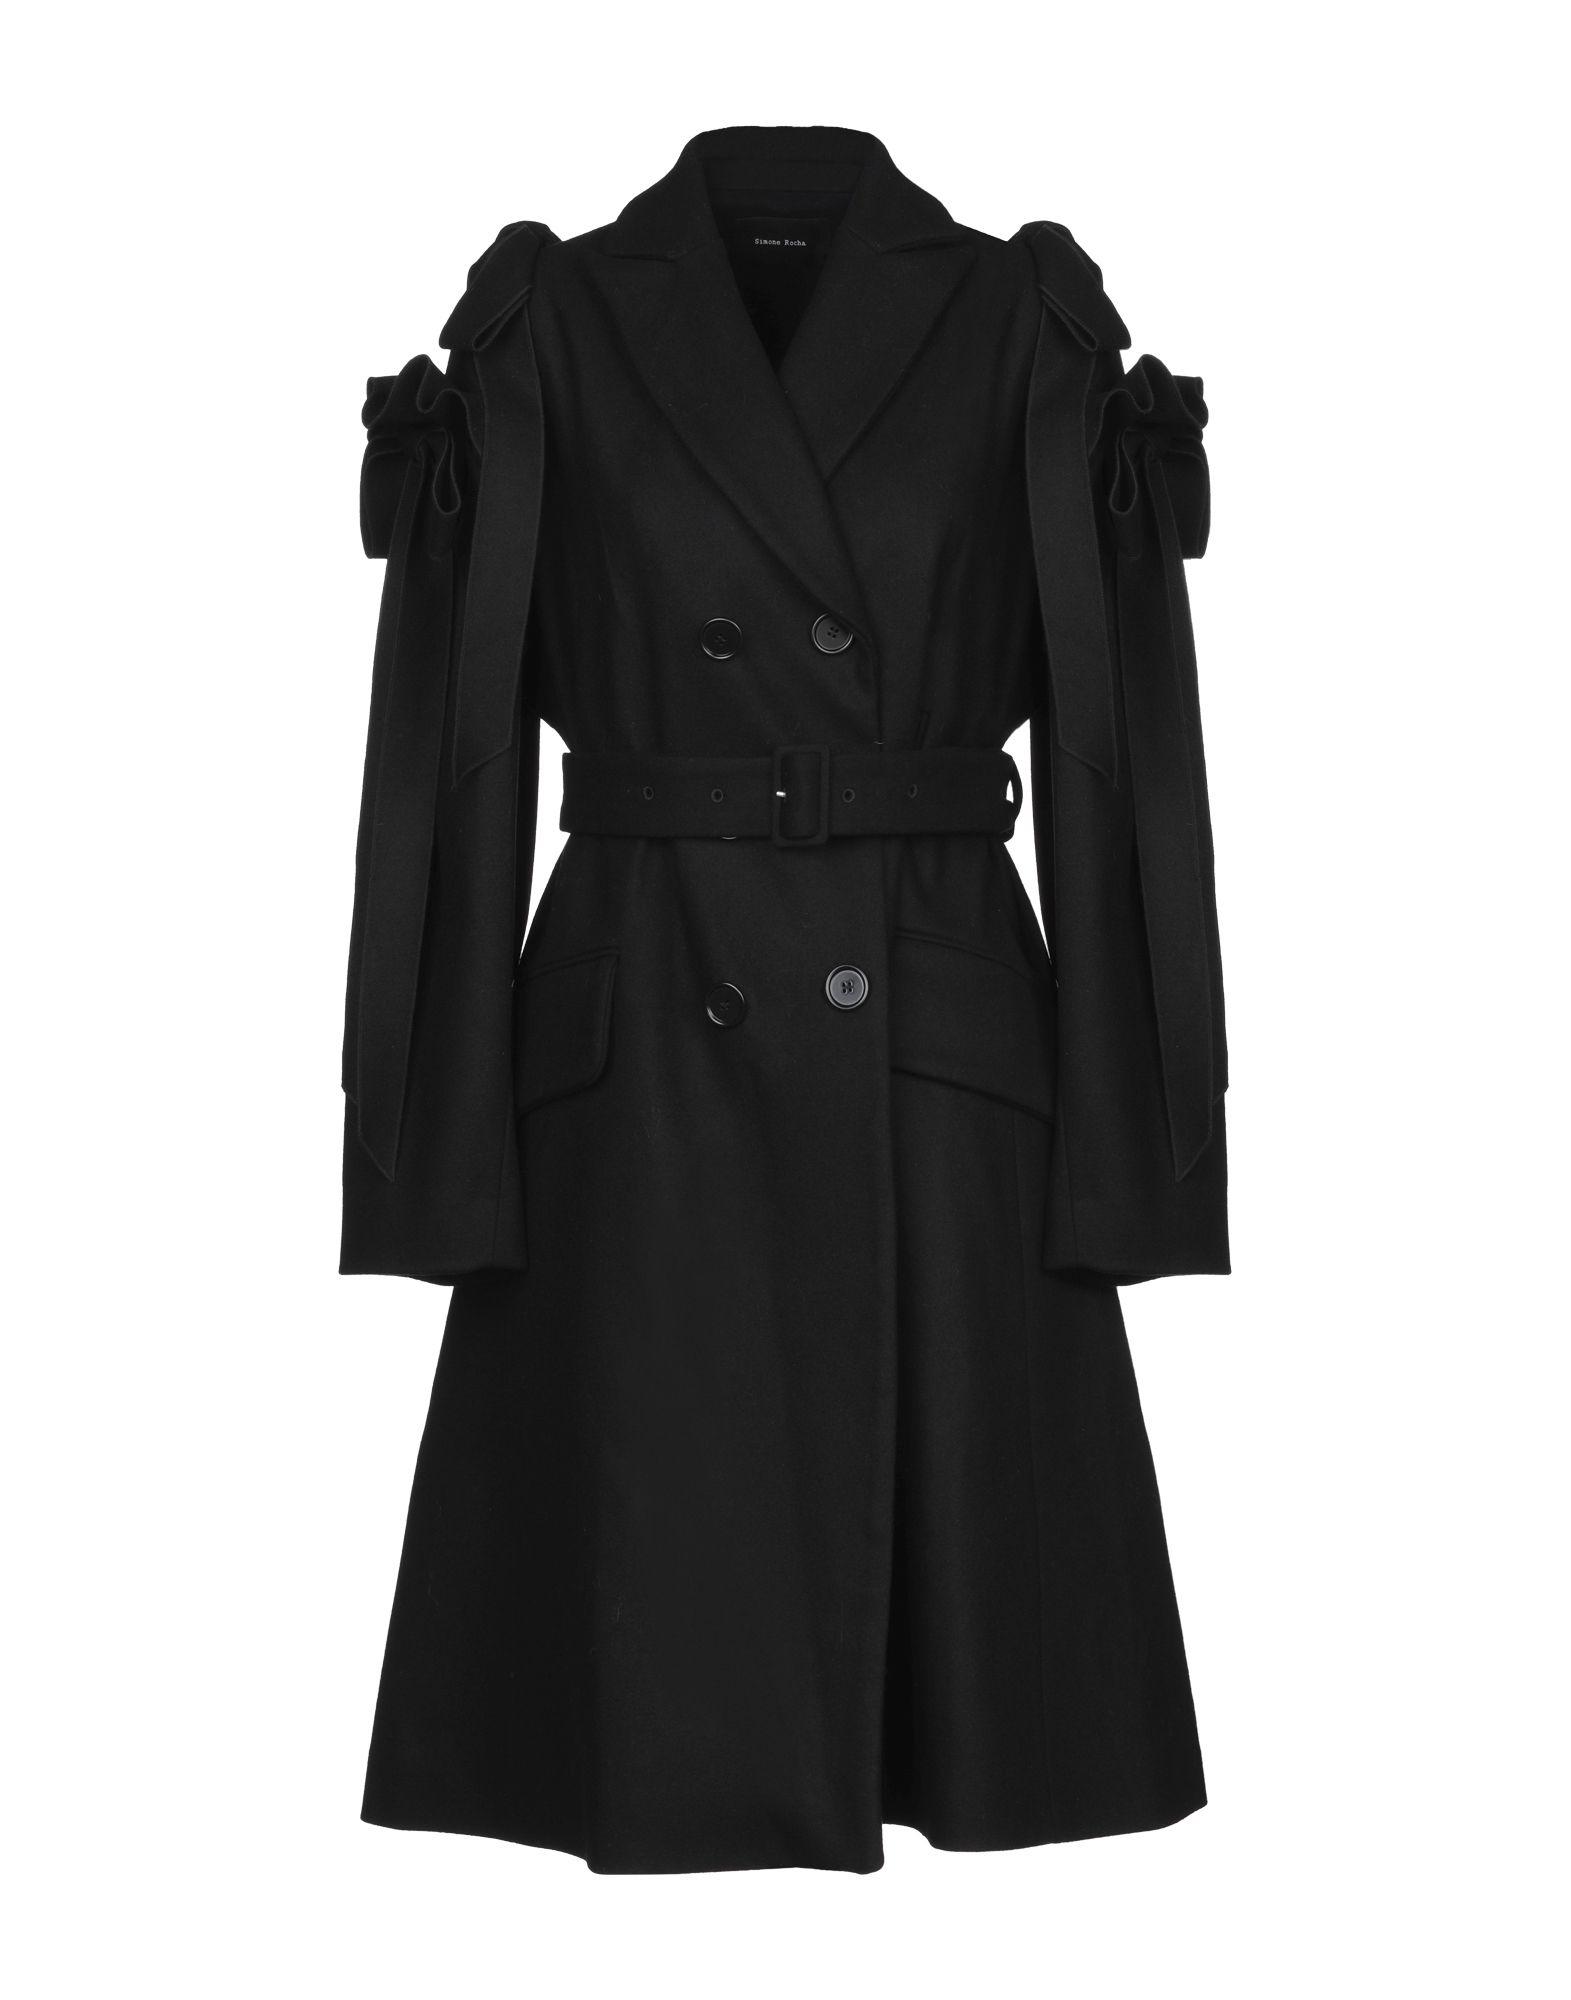 Simone Rocha Synthetic Coat in Black - Lyst